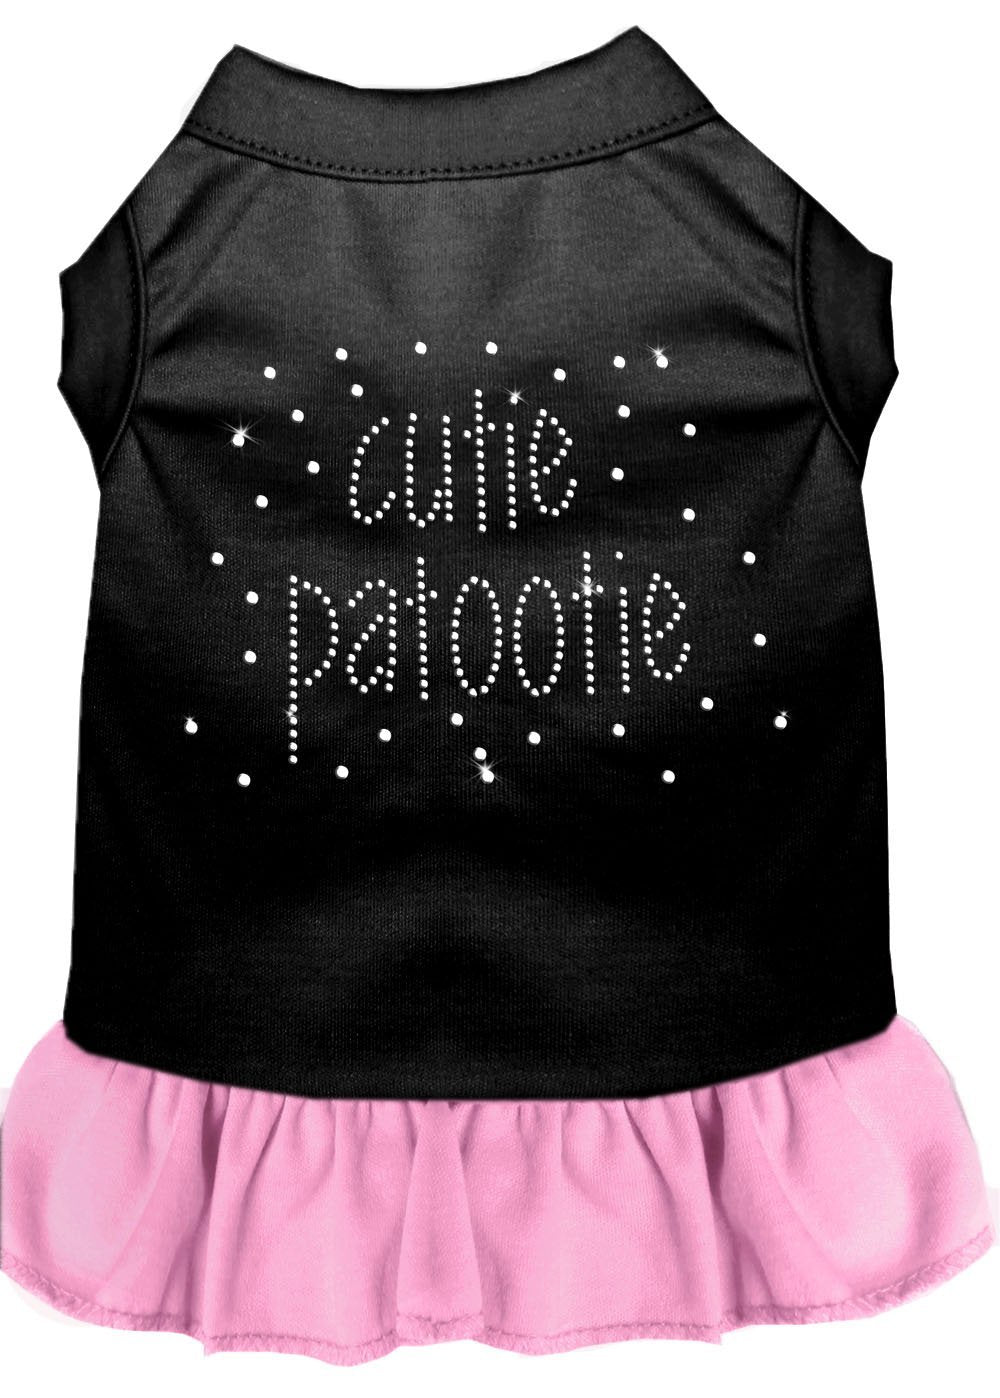 Cutie Patootie Rhinestone Dress